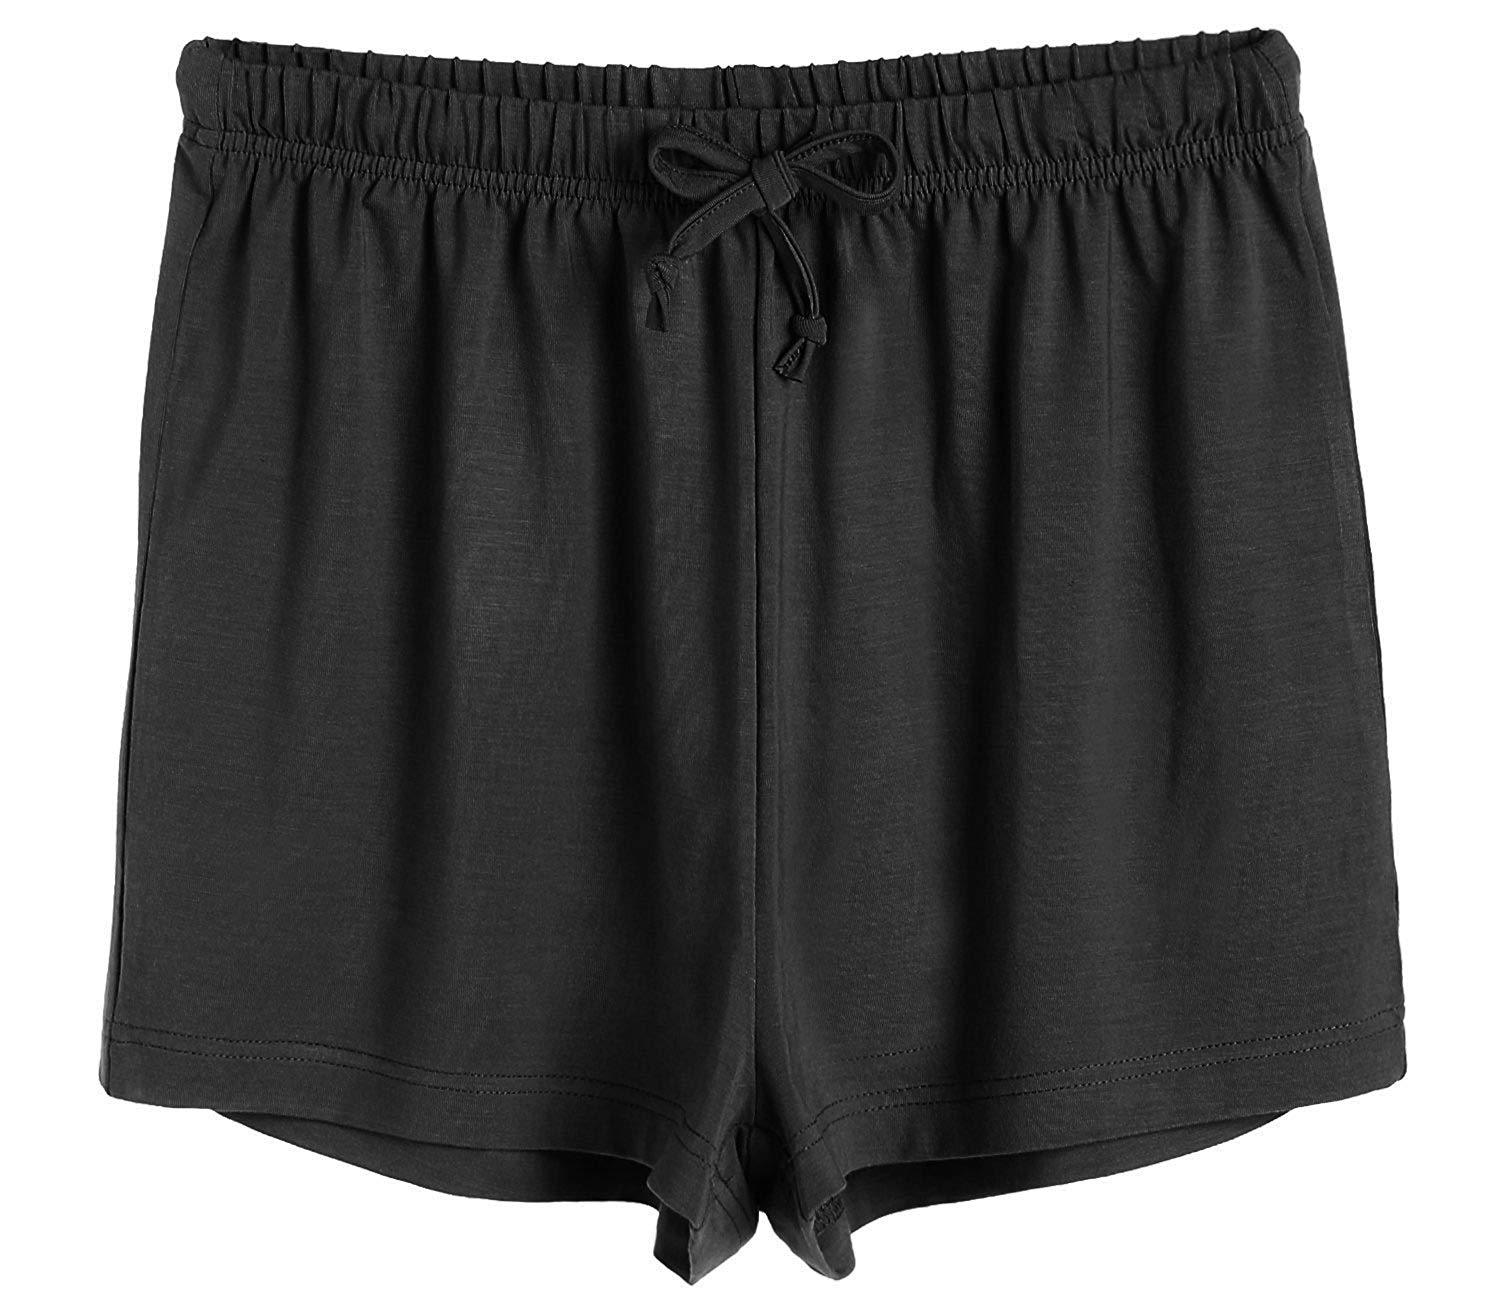 YWDJ Plus Size Underwear for Women Women Letter Print Boxer Shorts Sports  Comfortable Shorts Pajamas Underpant Black XL 